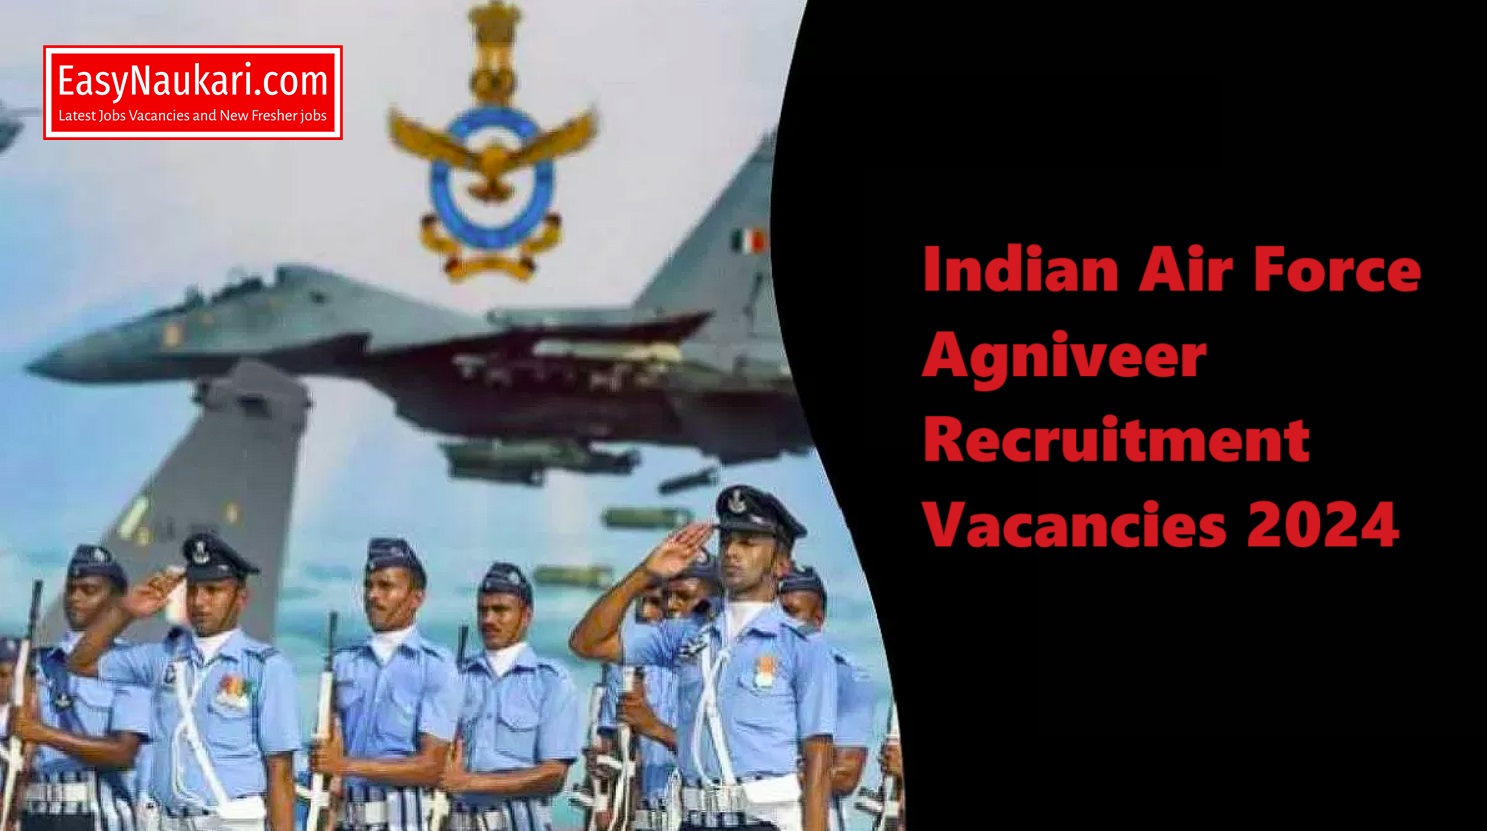 Indian Air Force Agniveer Recruitment Vacancies 2024